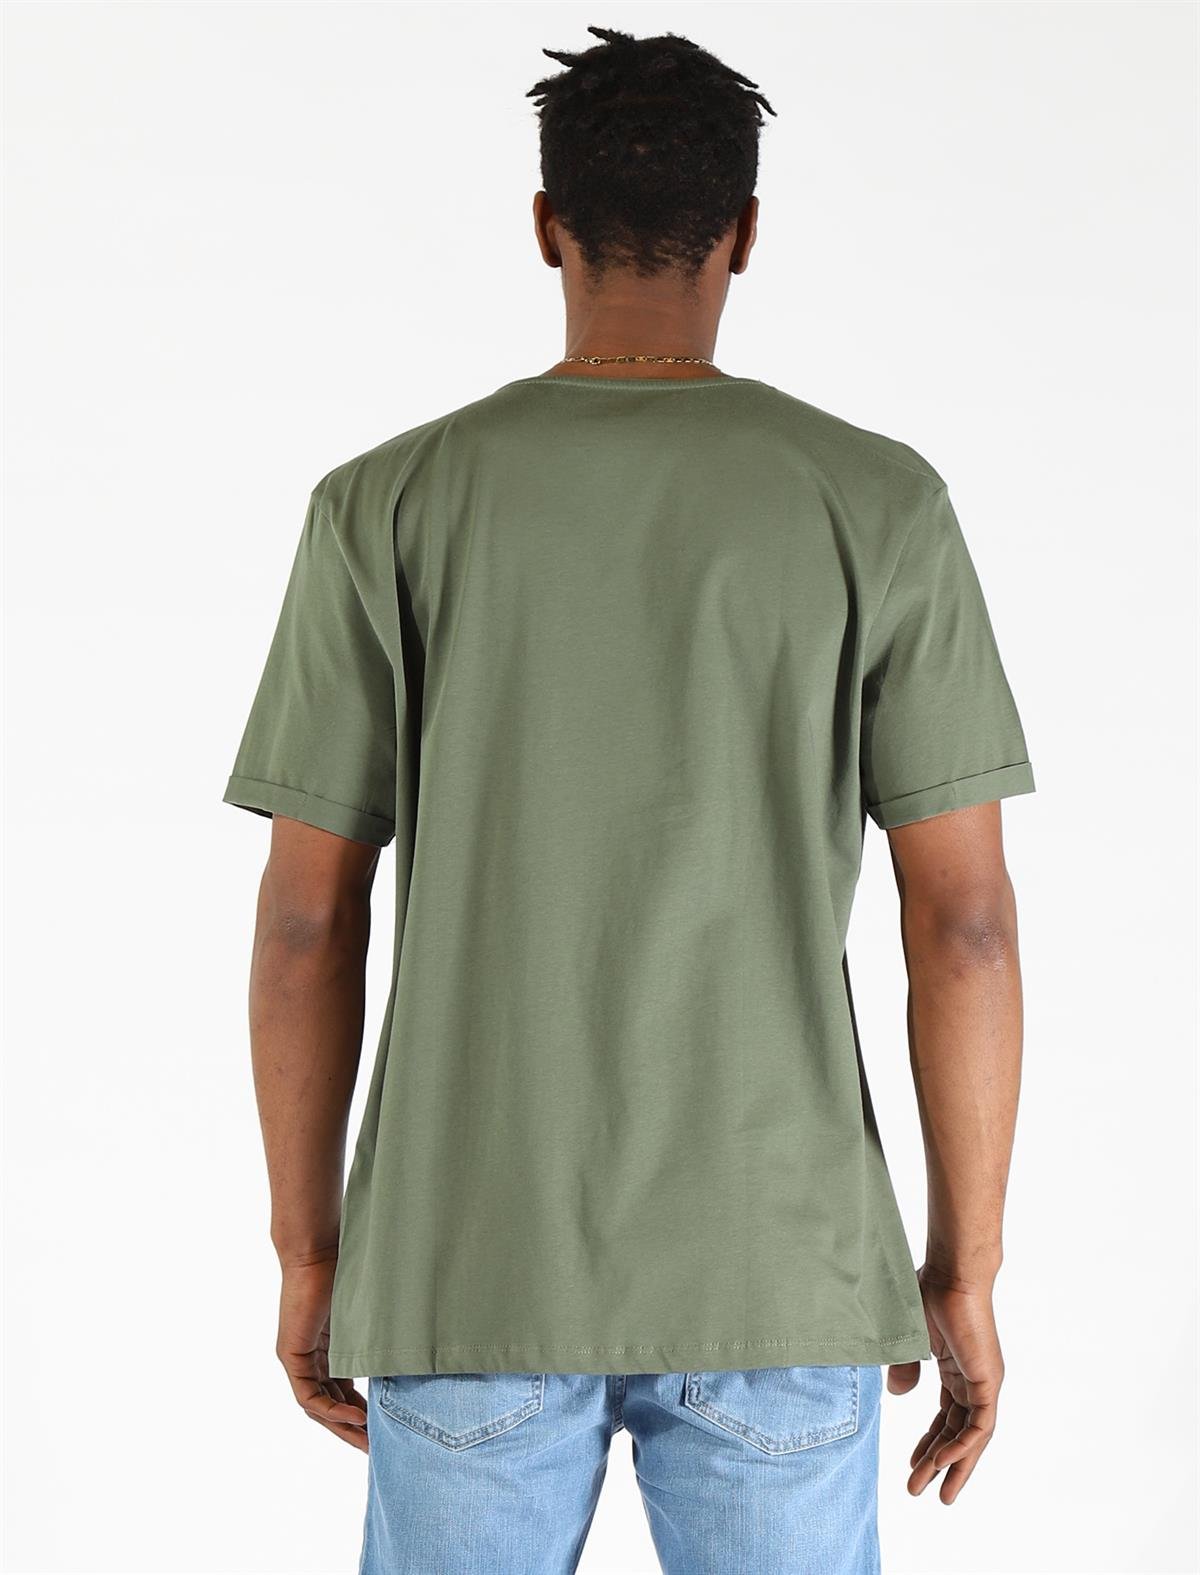 Erkek Slim Fit Tshirt Ets 1828 Asker Yeşili